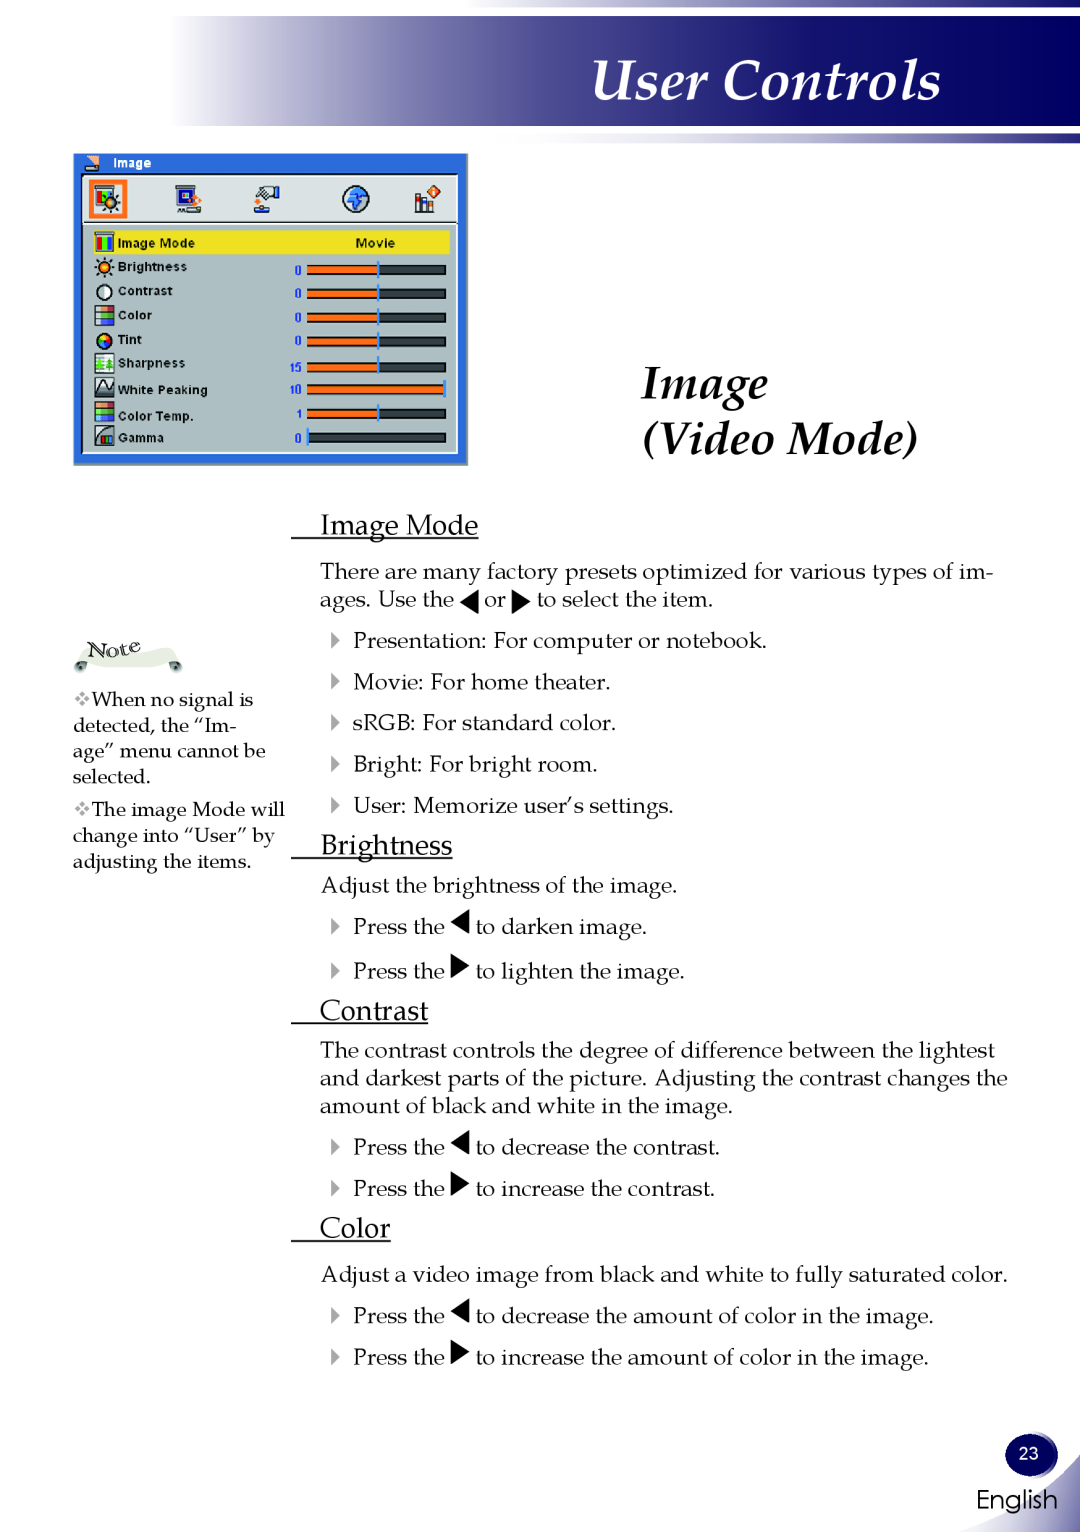 Sanyo PDG-DXL100 owner manual Image Video Mode, Color, User Controls, Image Mode, Brightness, Contrast, English 